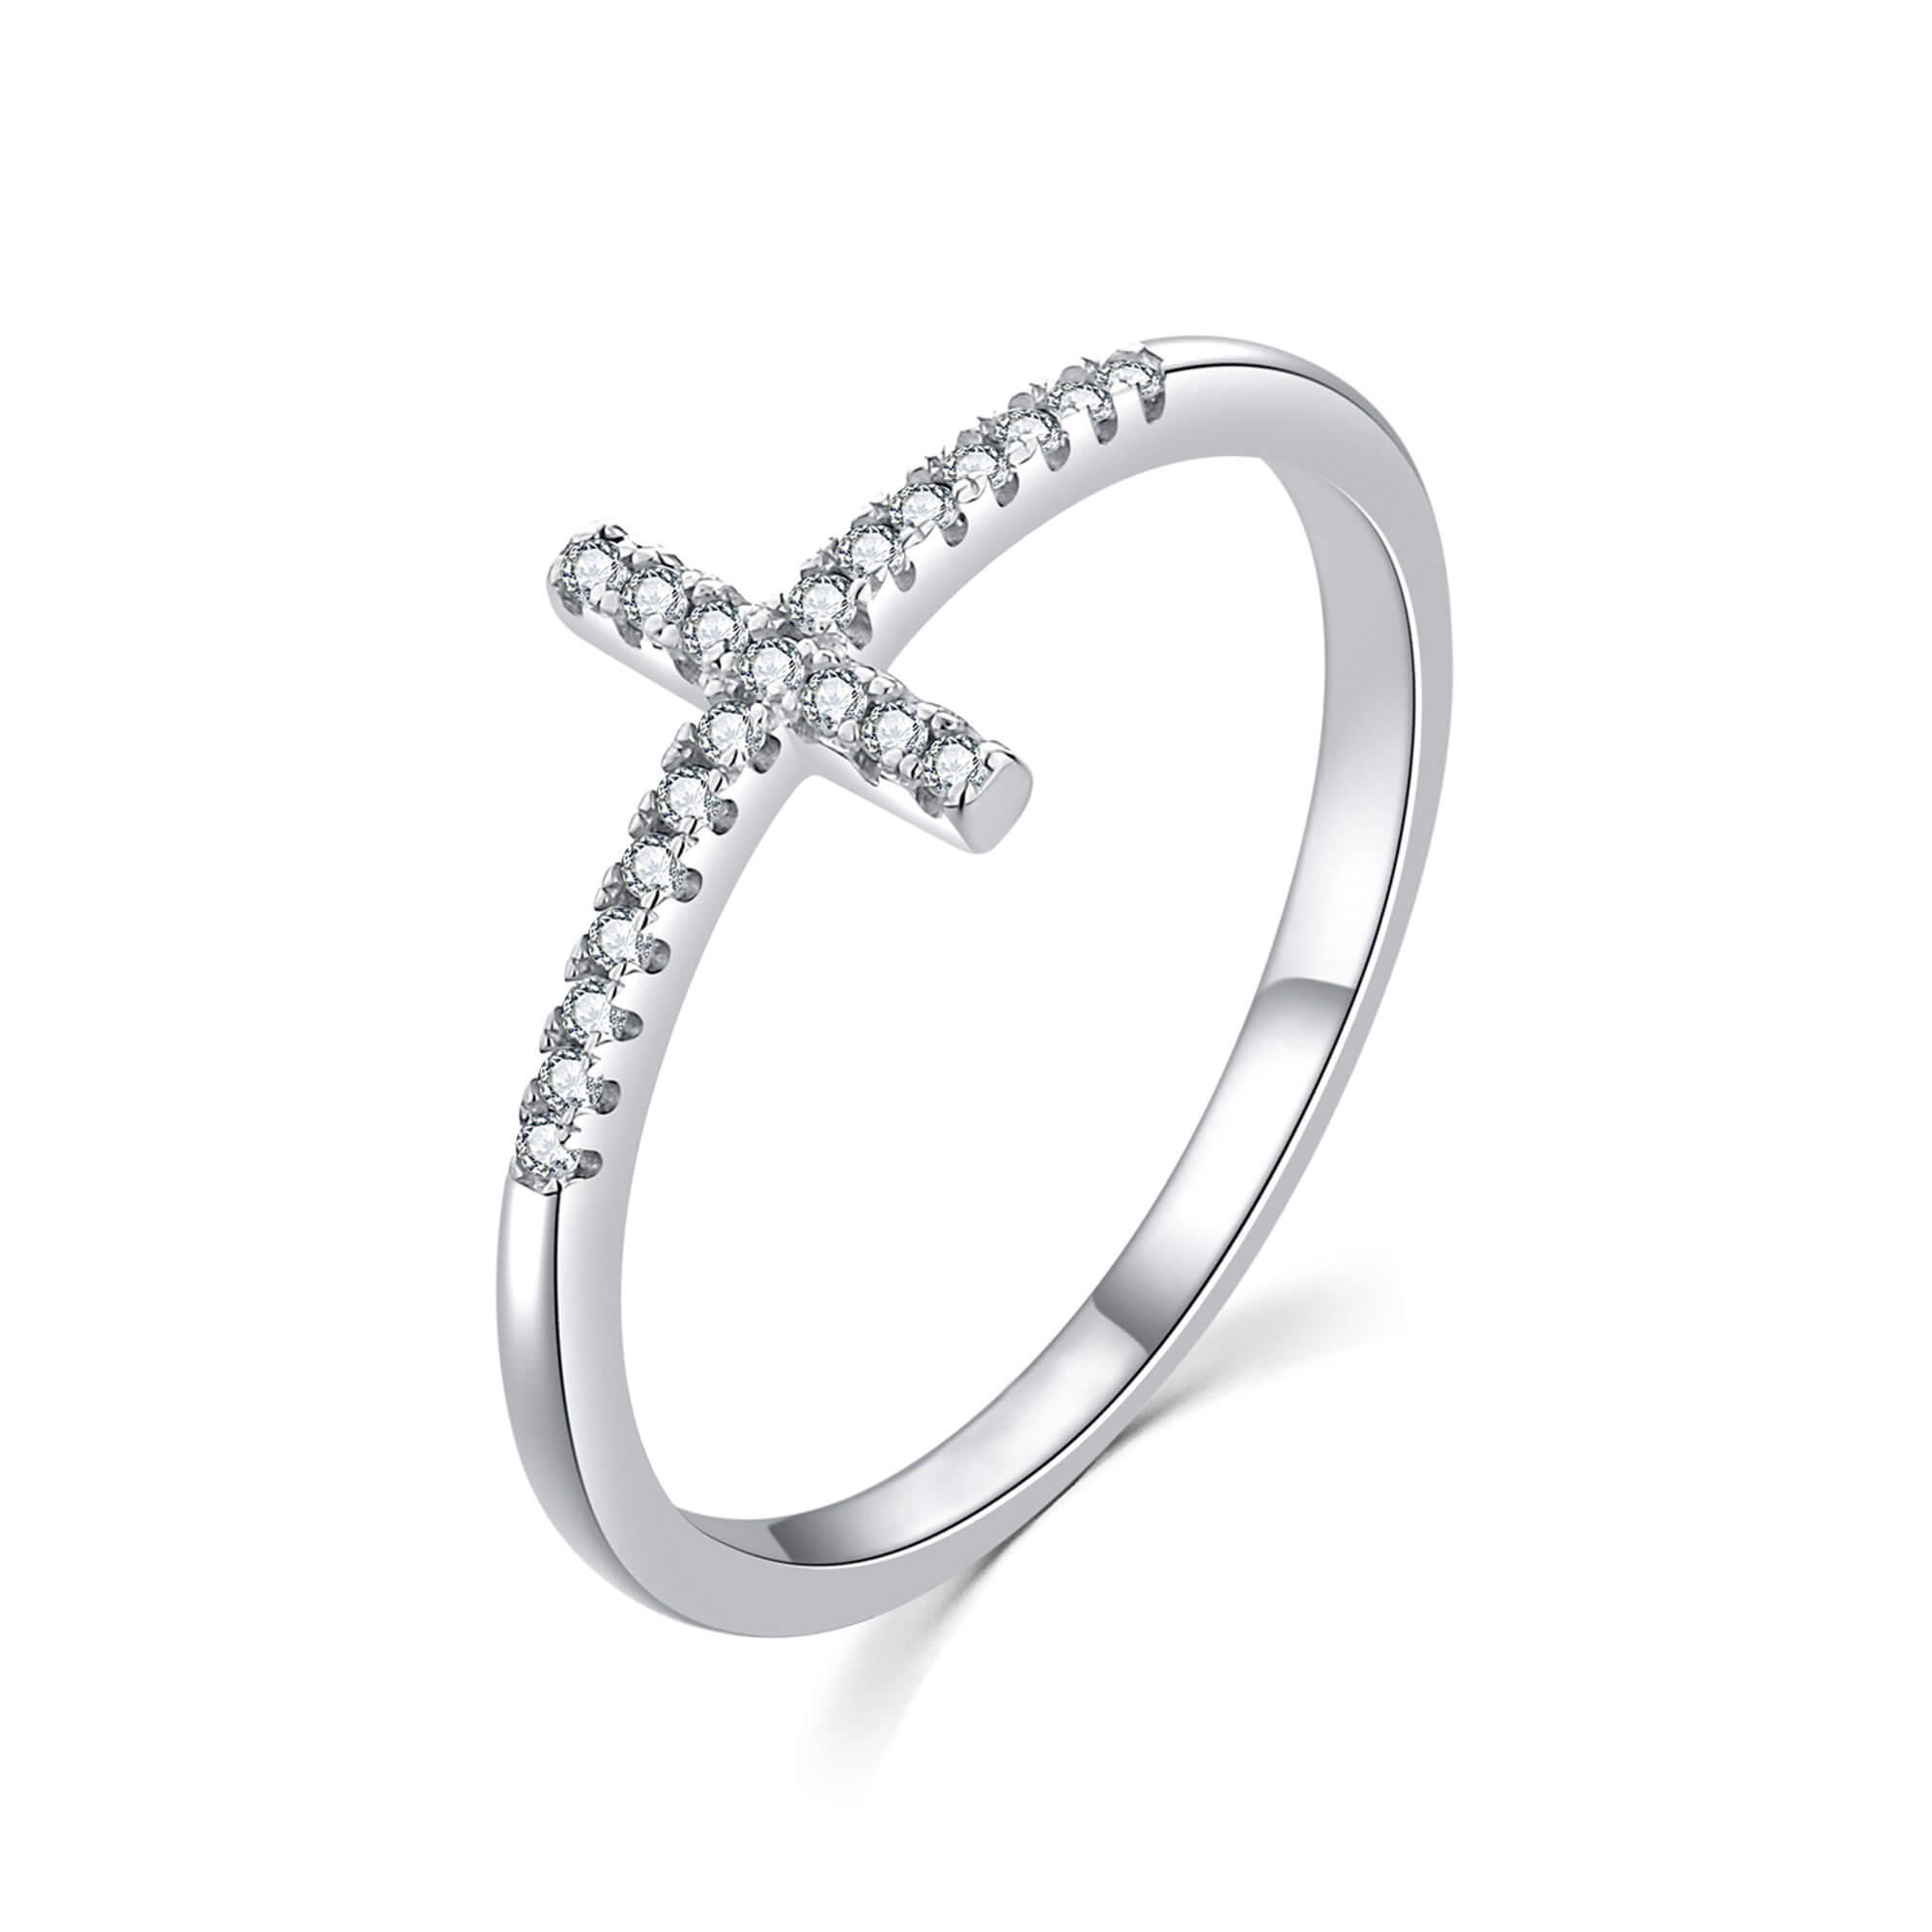 MOISS Elegantní stříbrný prsten s křížkem R00020 58 mm